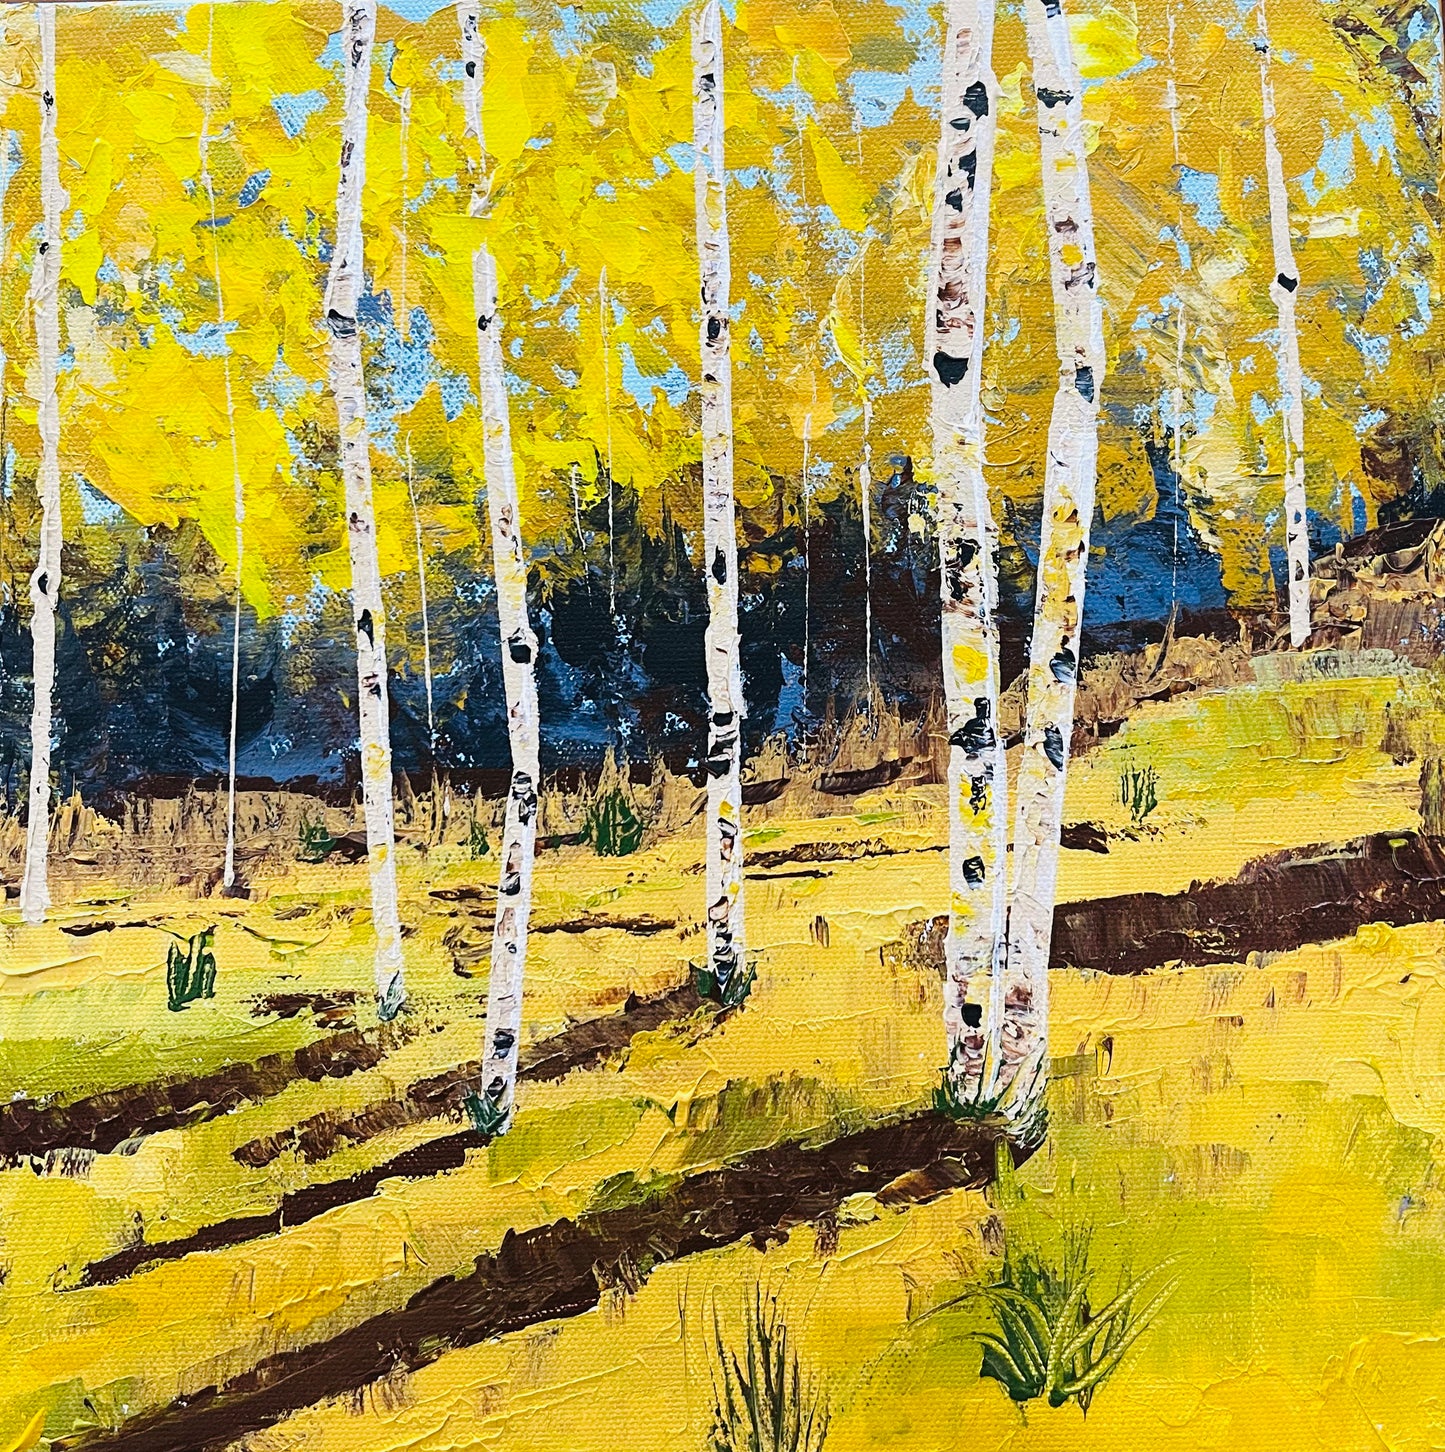 Colorado Fall Landscape with Aspen Trees